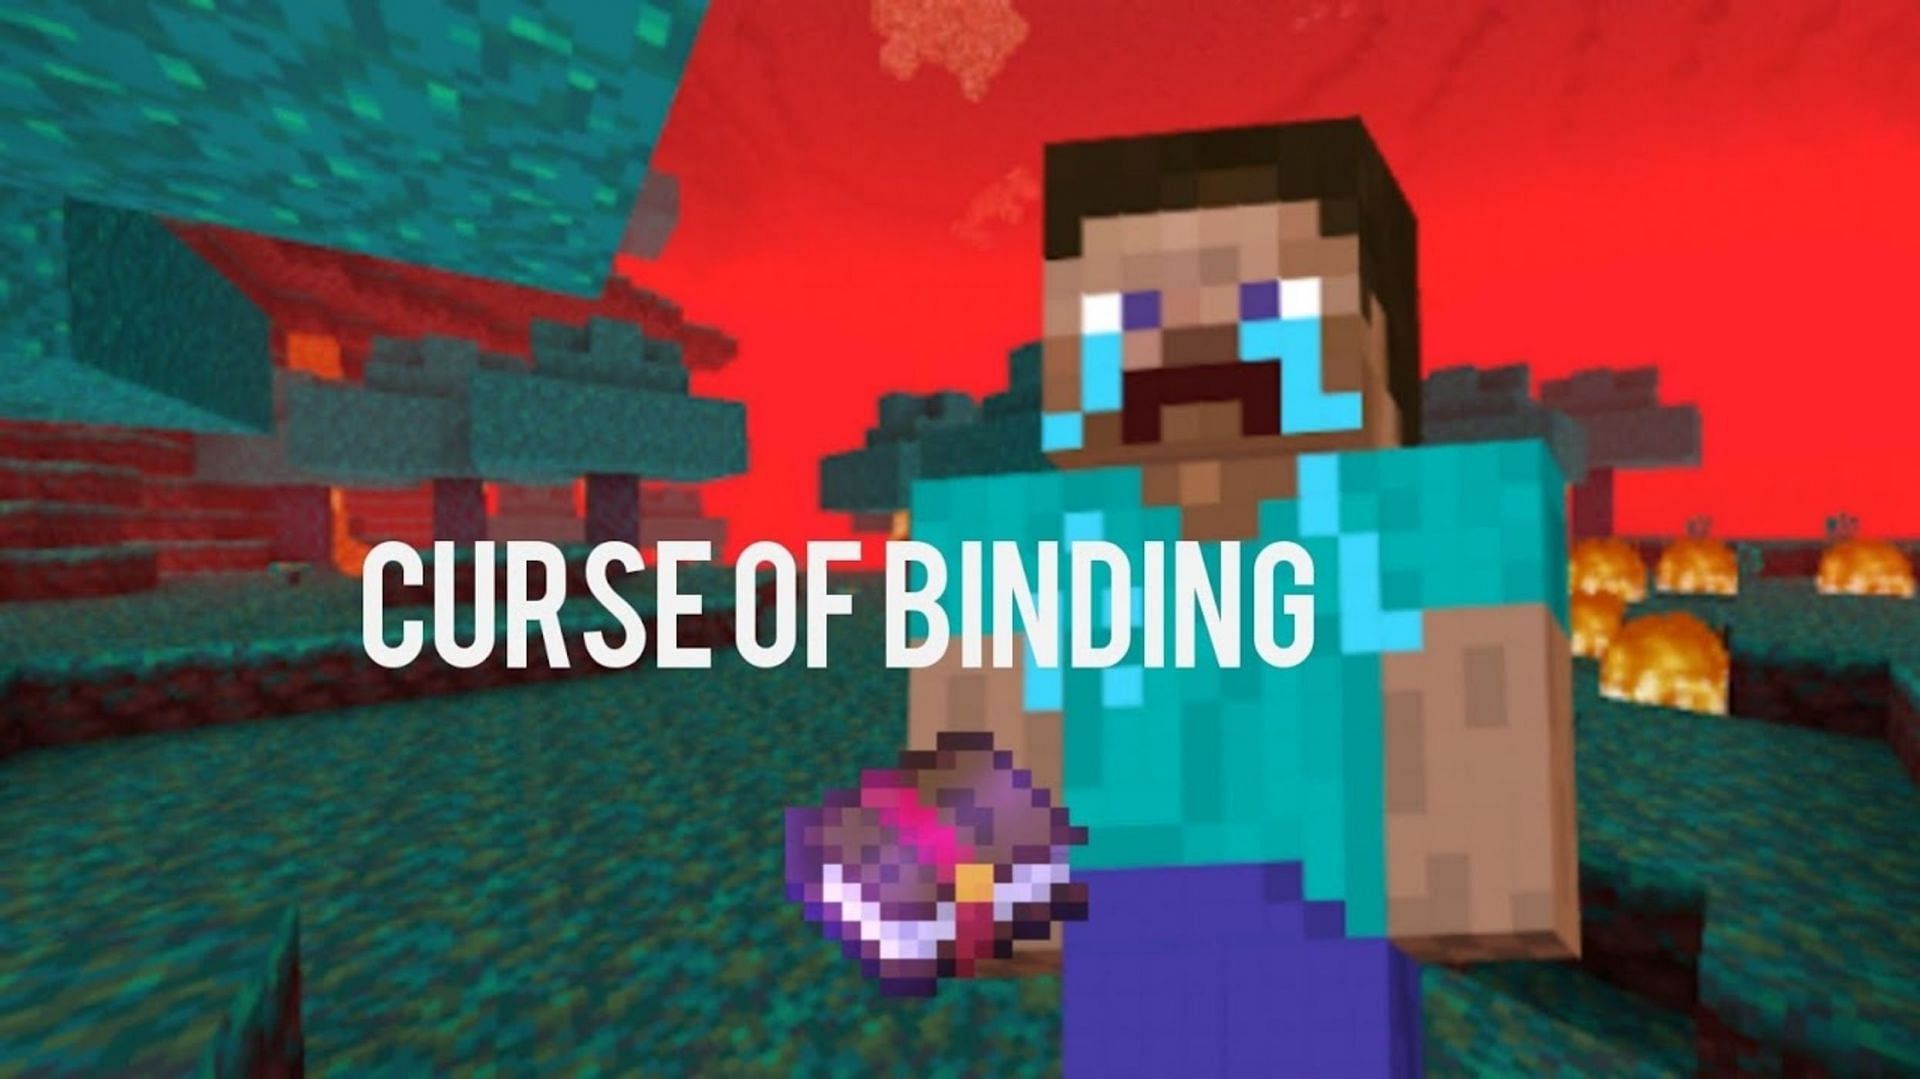 Minecraft: Curse of Vanishing - Apex Hosting